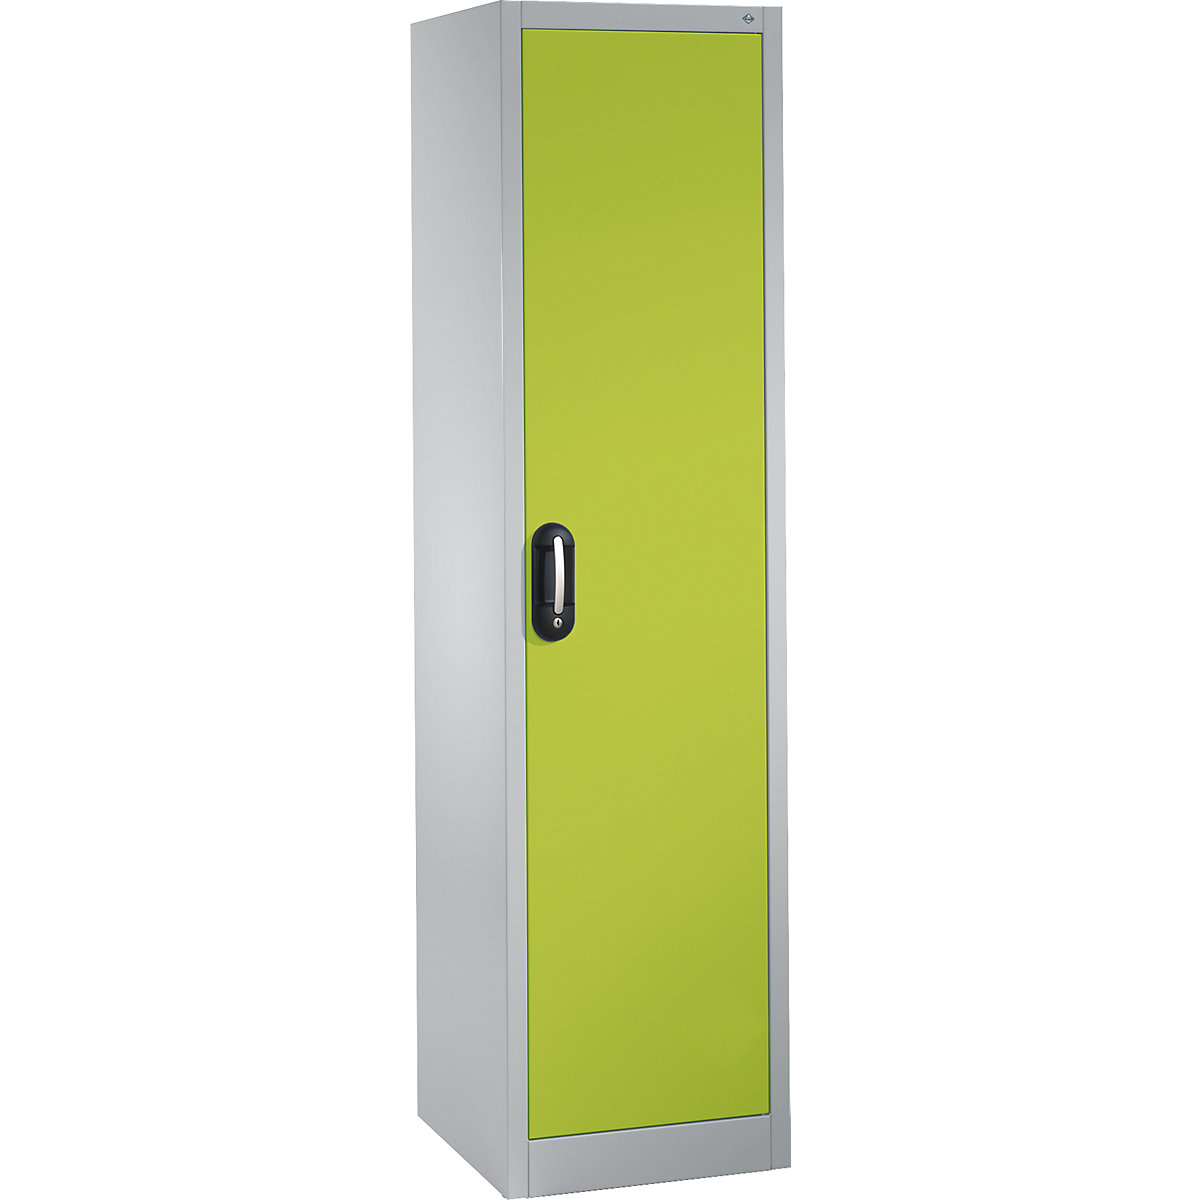 C+P – ACURADO universal cupboard, WxD 500 x 500 mm, light grey / viridian green